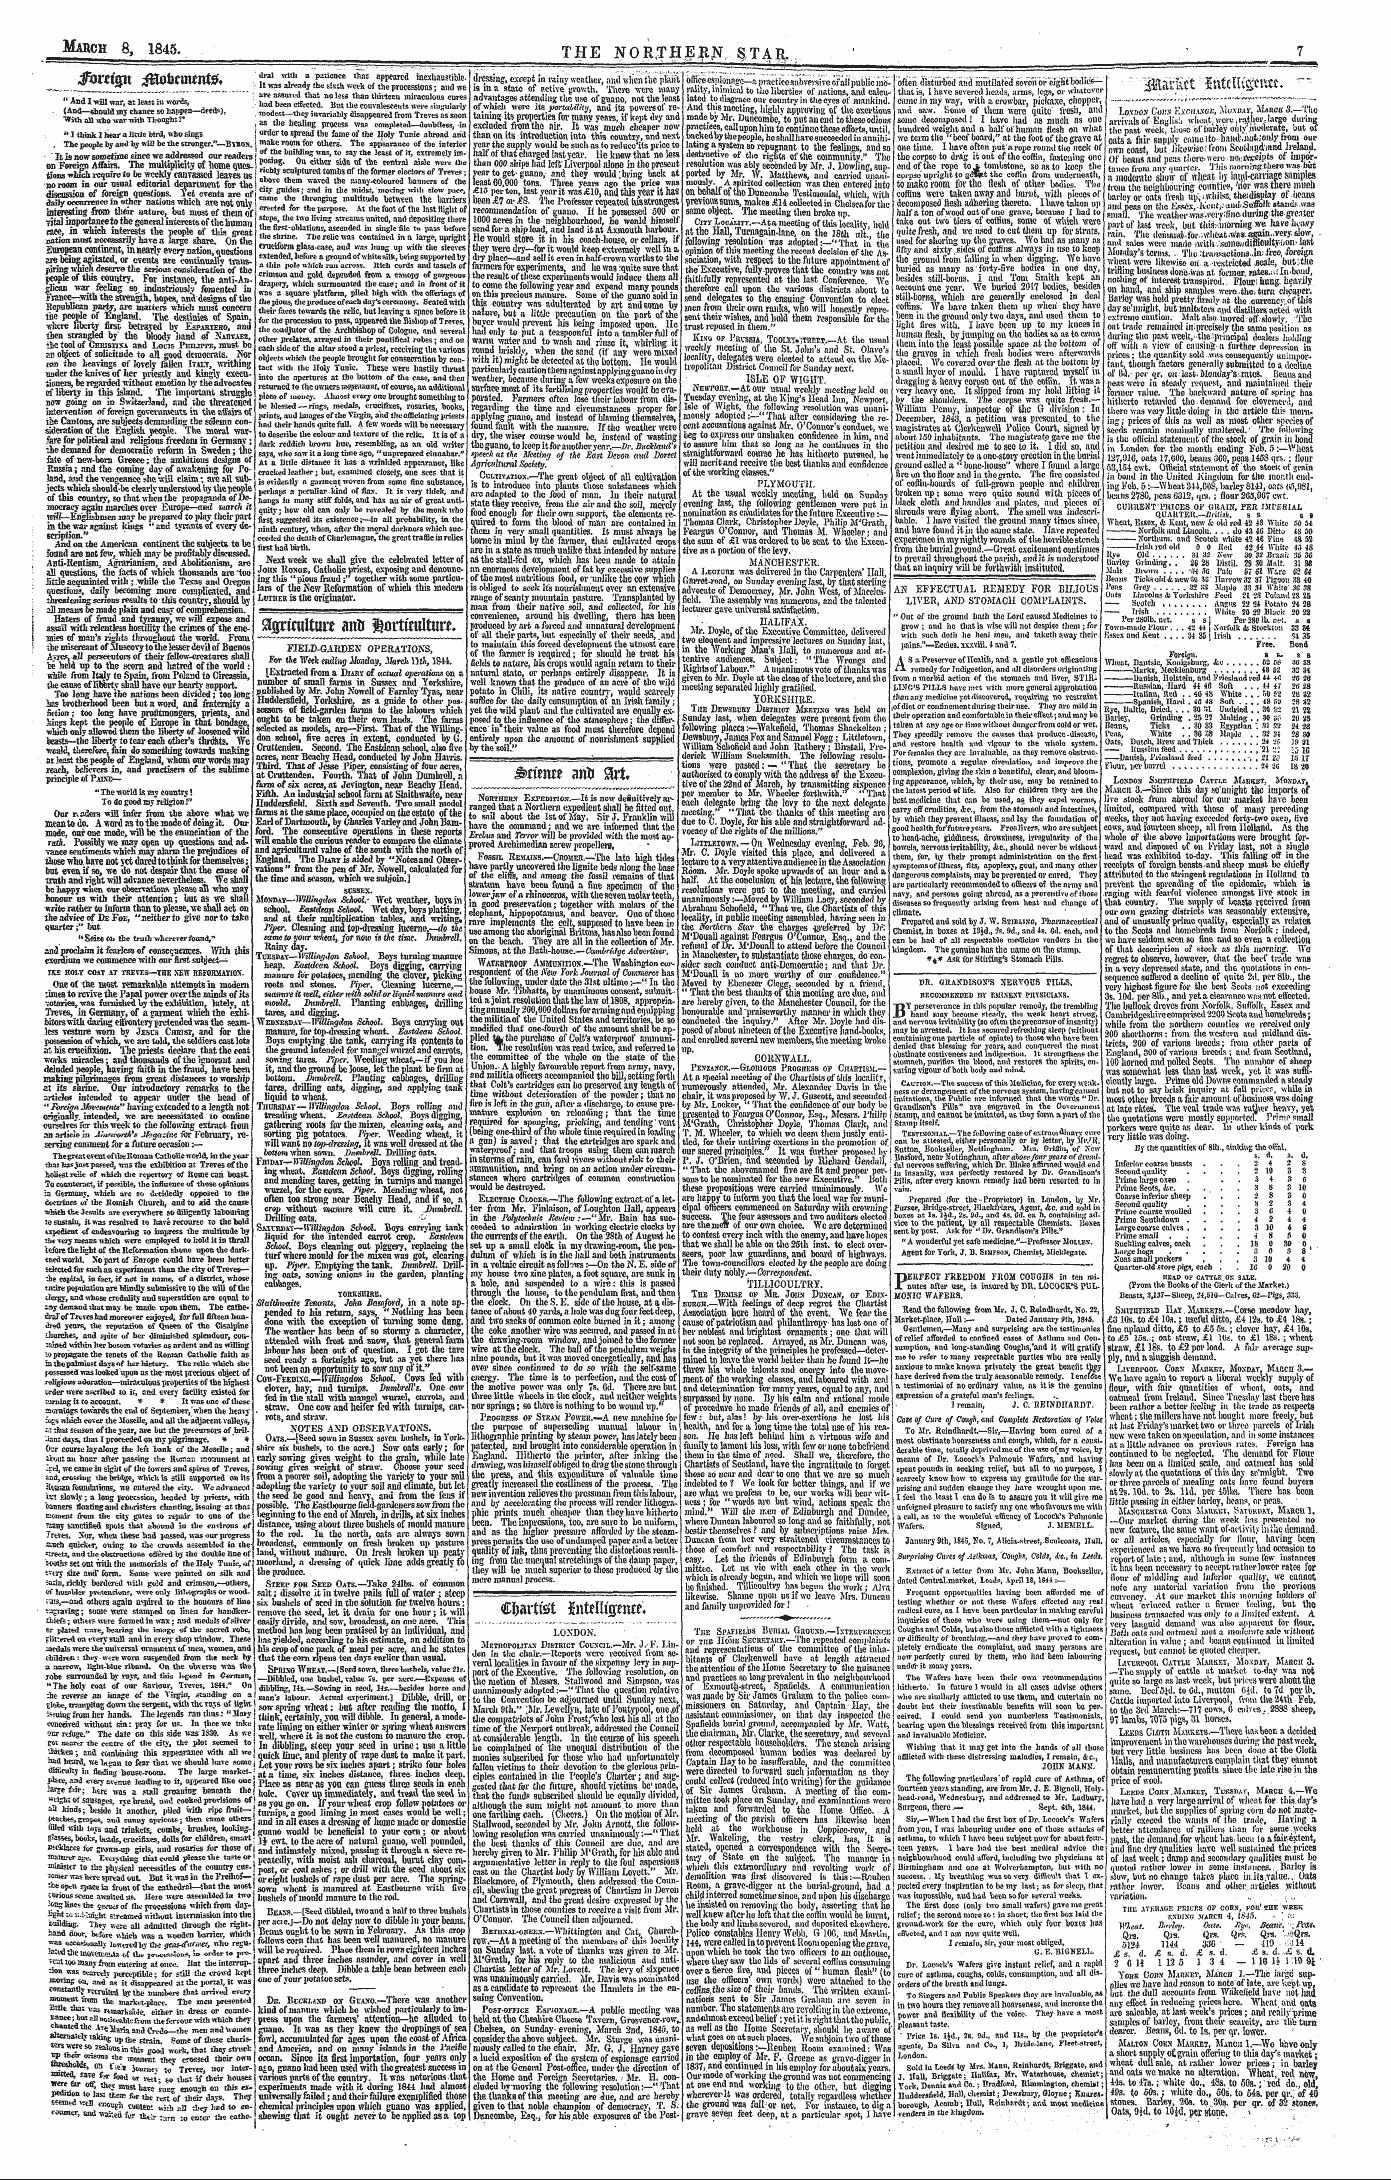 Northern Star (1837-1852): jS F Y, 2nd edition - Aarkct "Intfucgctttt